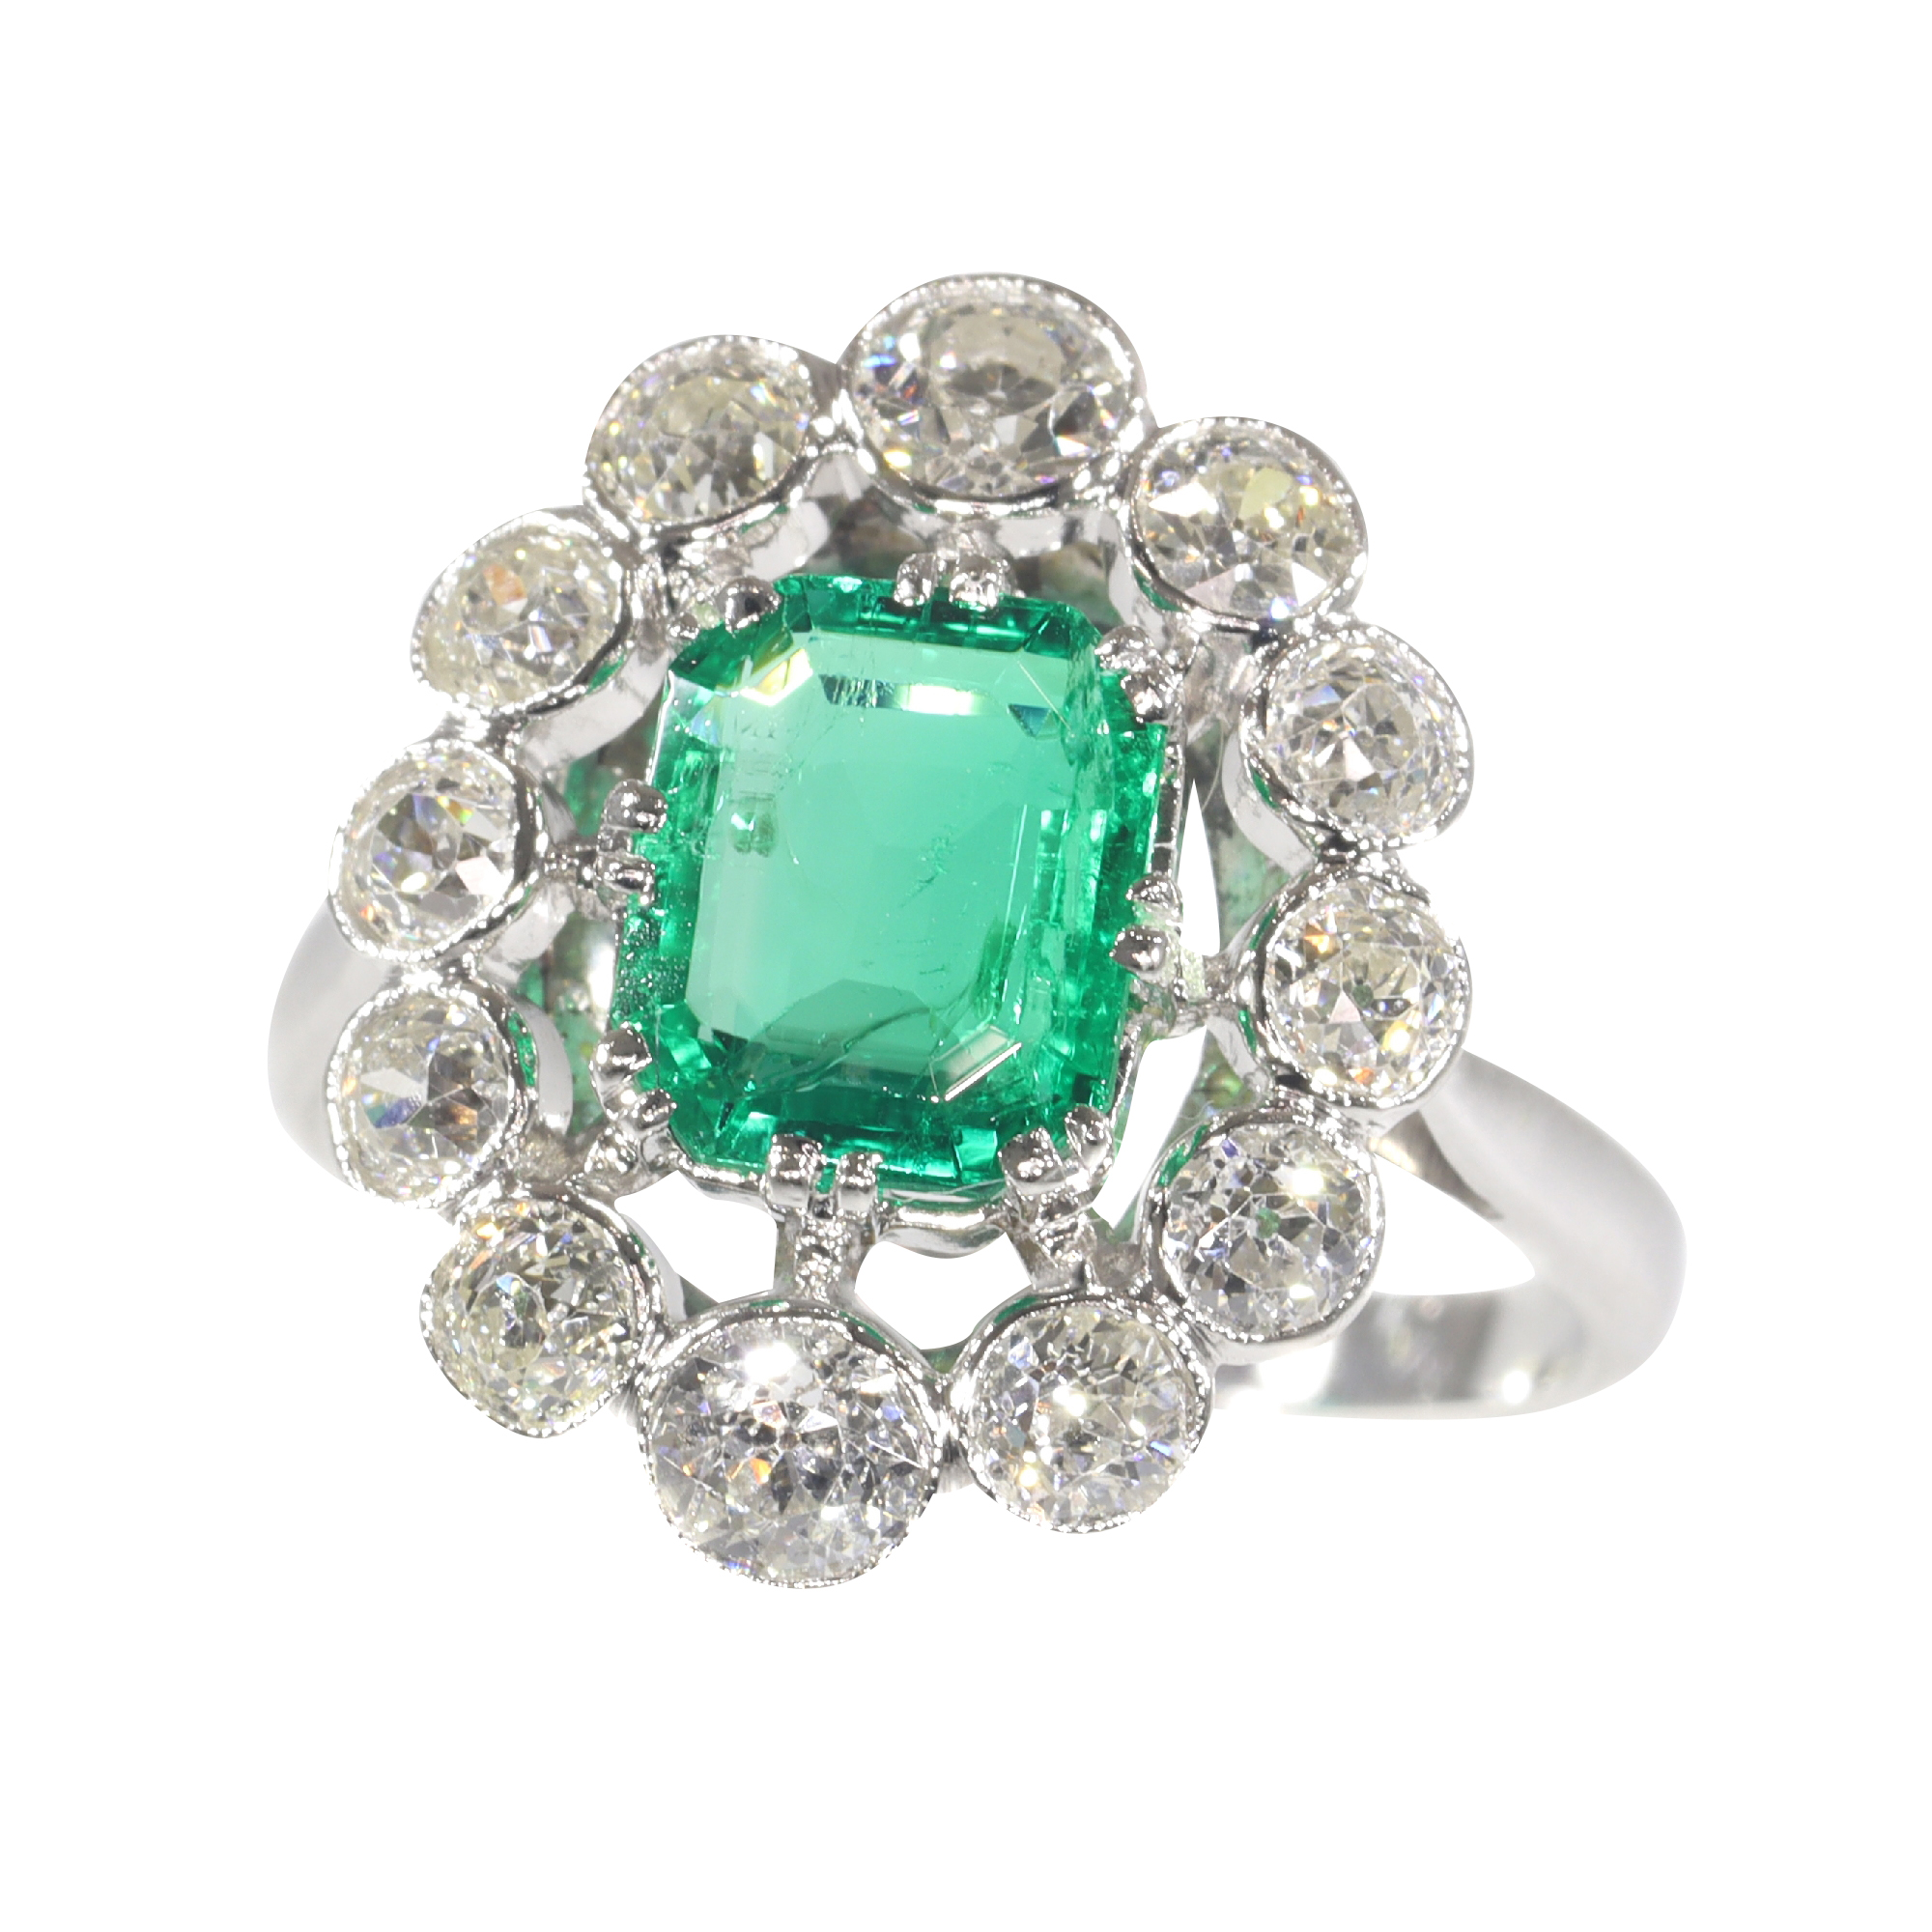 Genuine vintage Art Deco diamond and emerald engagement ring